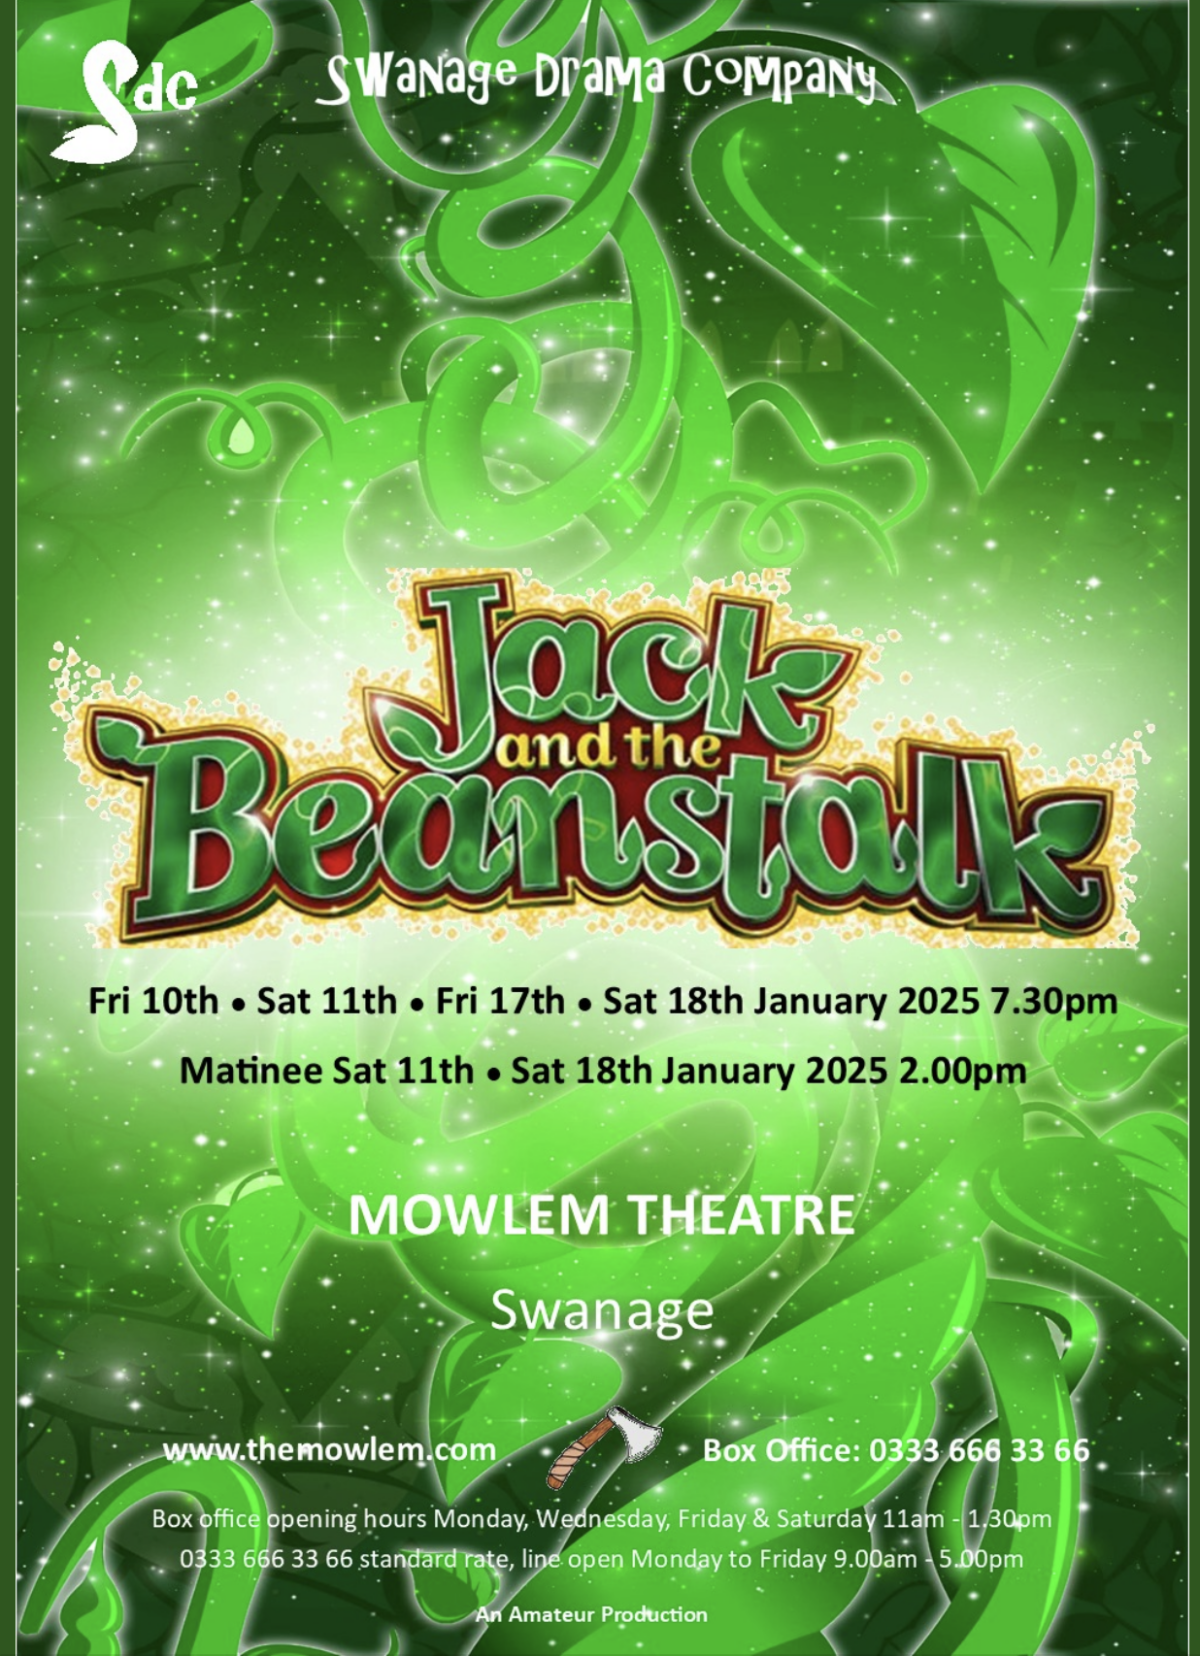 Swanage Drama Company panto Jack & the Beanstalk poster